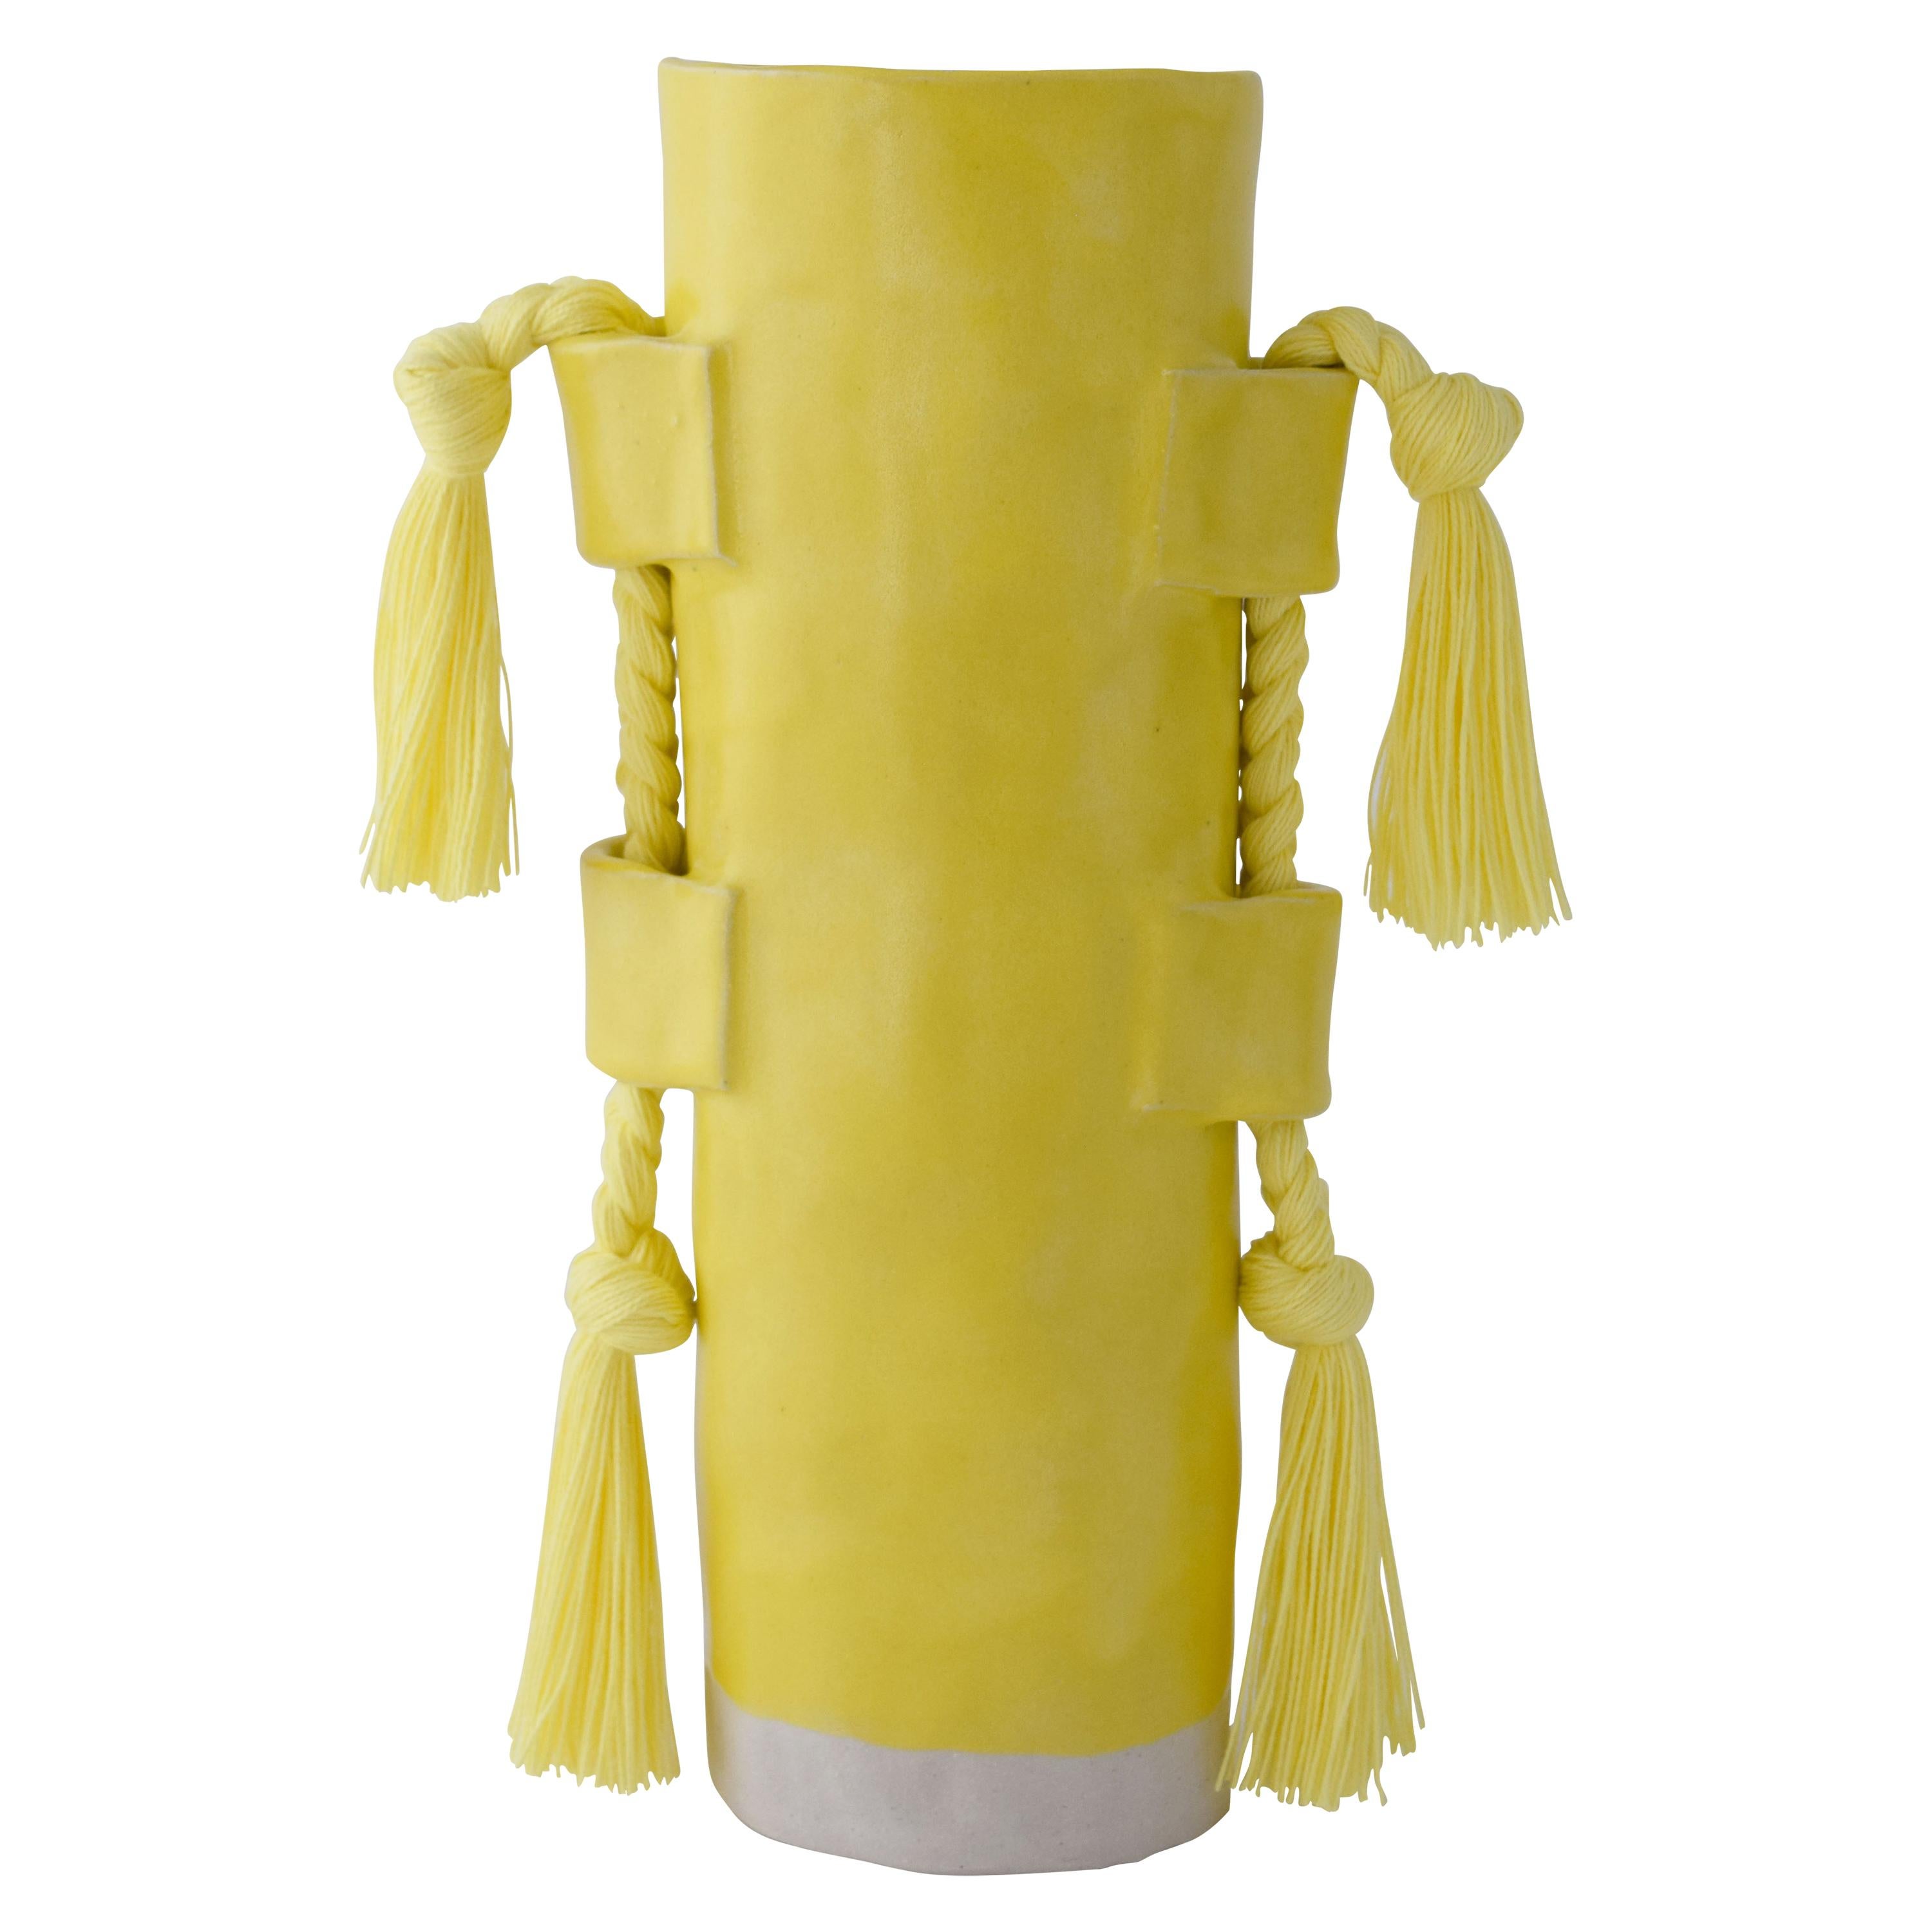 Handmade Vase #504 in Yellow with Yellow Cotton Fringe